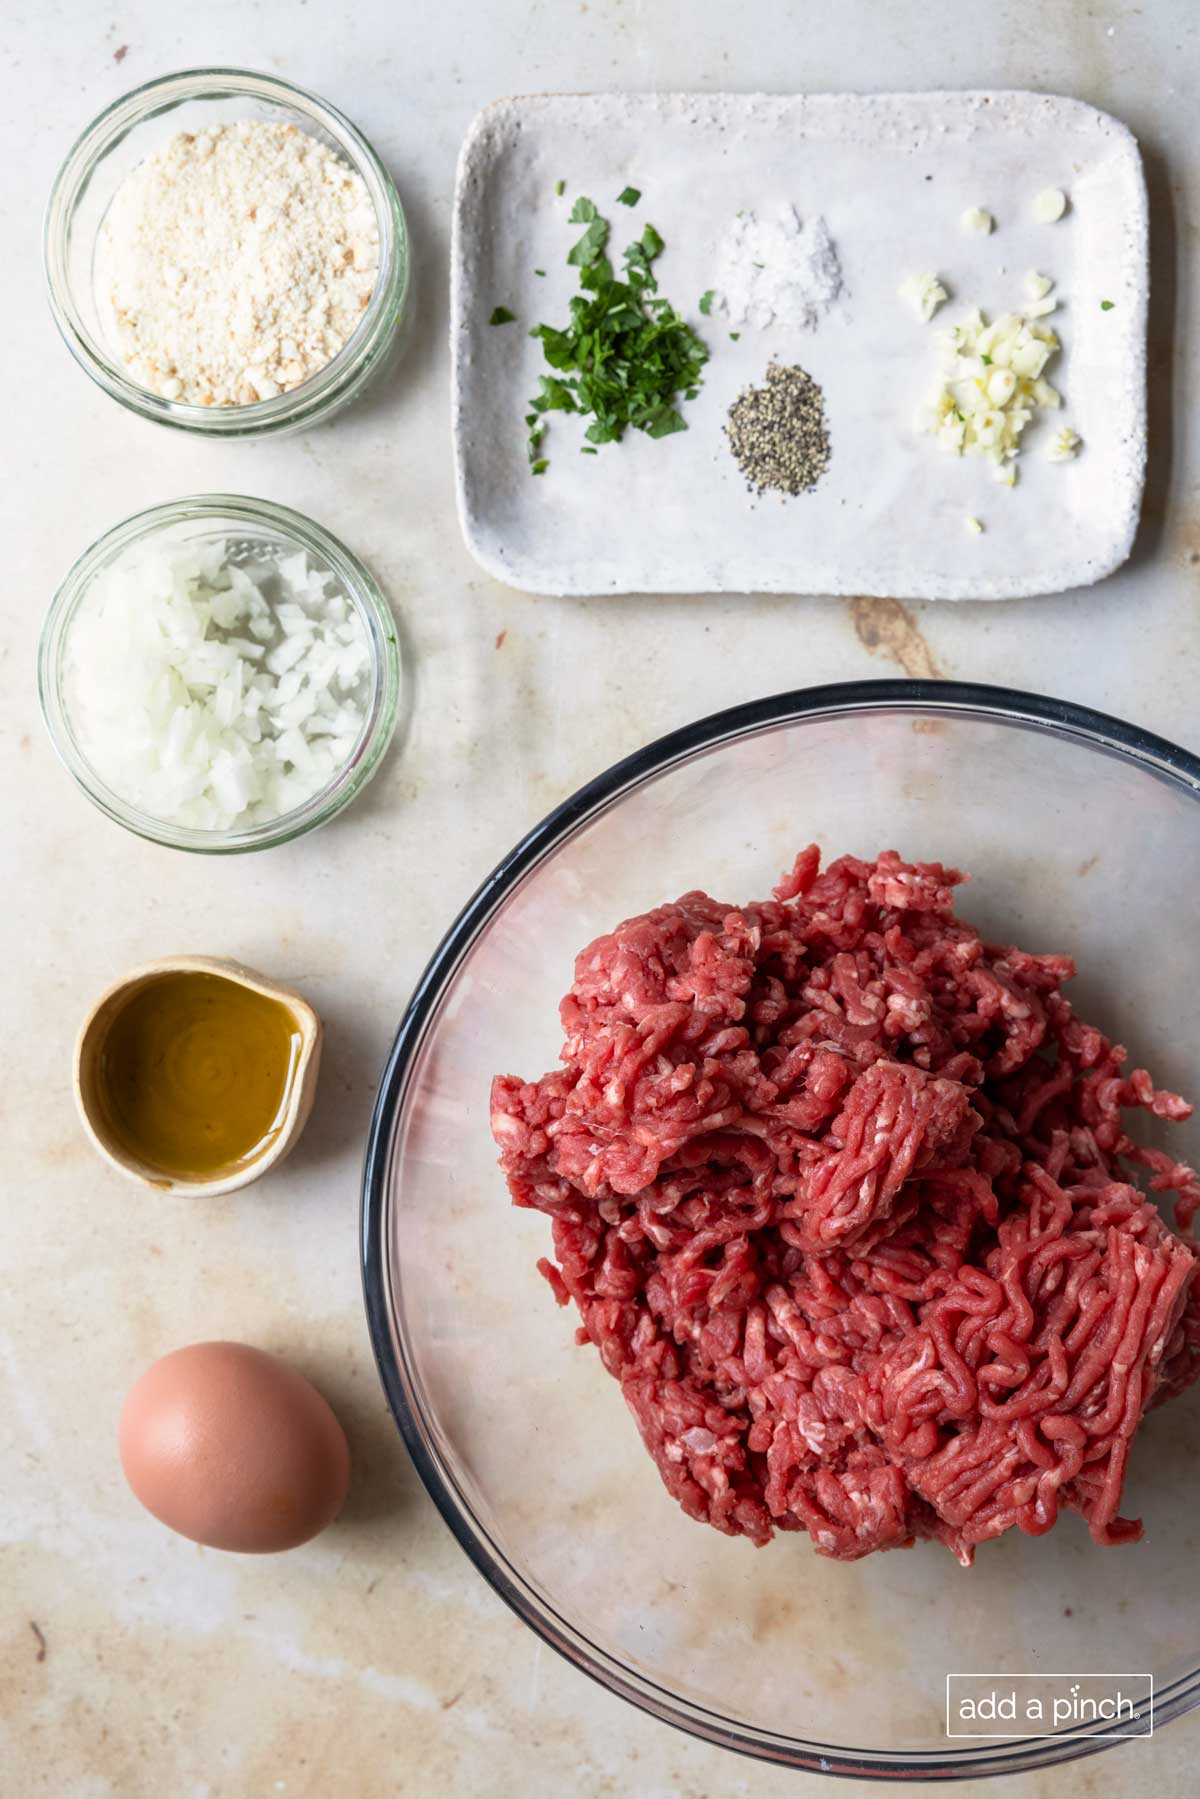 Photo of ingredients to make swedish meatballs. Ground beef, egg, worcestershire sauce, onion, cracker crumbs, and seasonings.